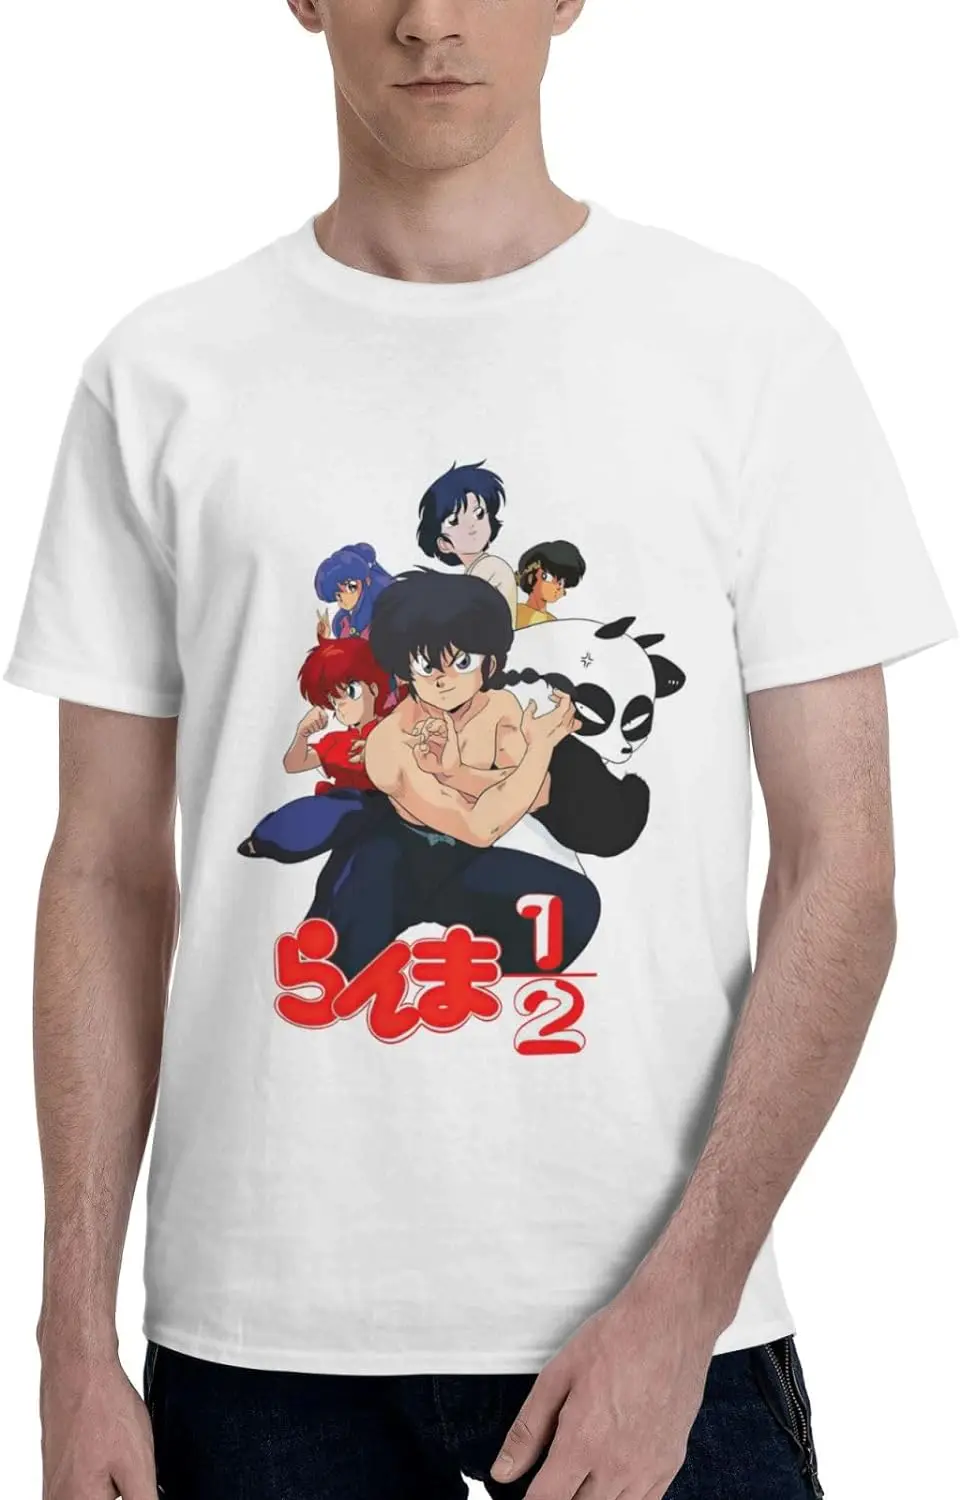 

Anime Ranma ½ Shirt Cotton Short Sleeve Cool T-Shirt for Male Black